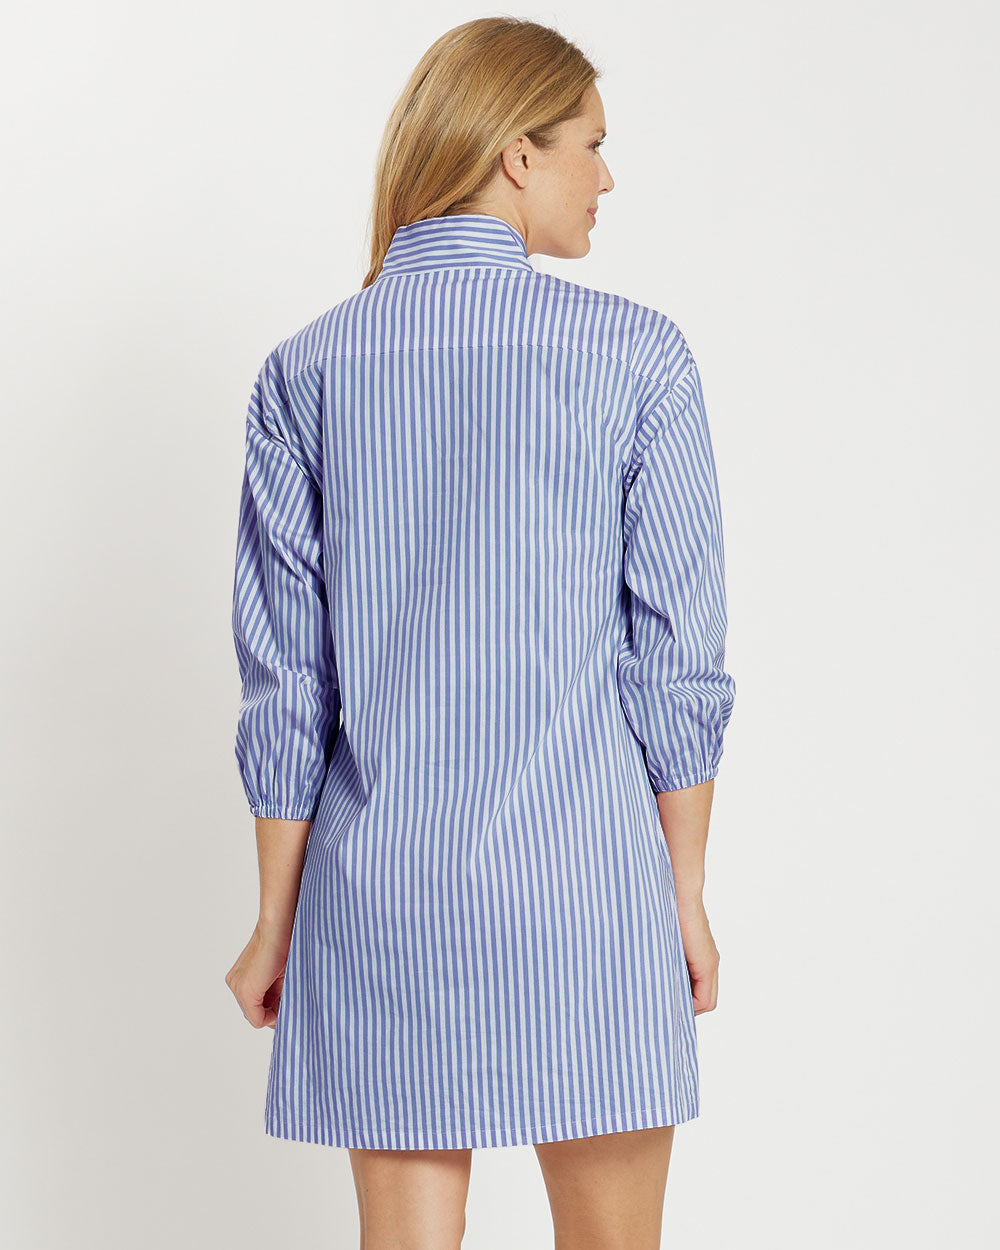 Florence Dress - Cotton Shirting